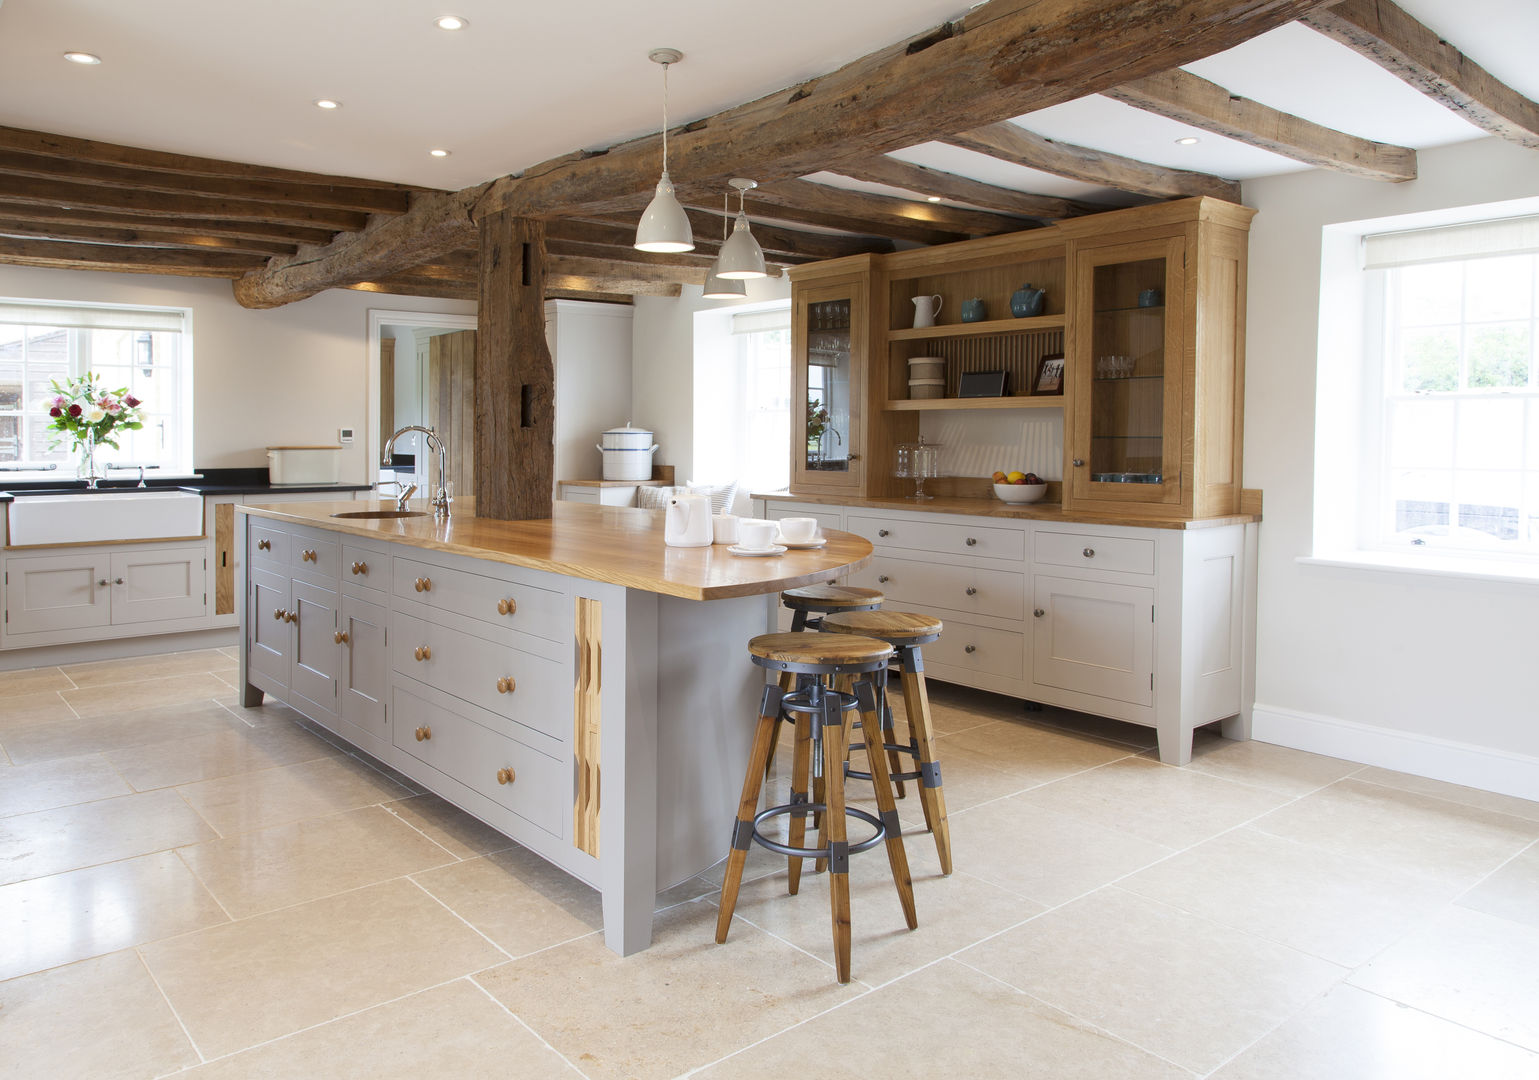 Old English - Bespoke kitchen project in Cambridgeshire Baker & Baker Kitchen dresser,kitchen island,seating,tile flooring,beams,lighting